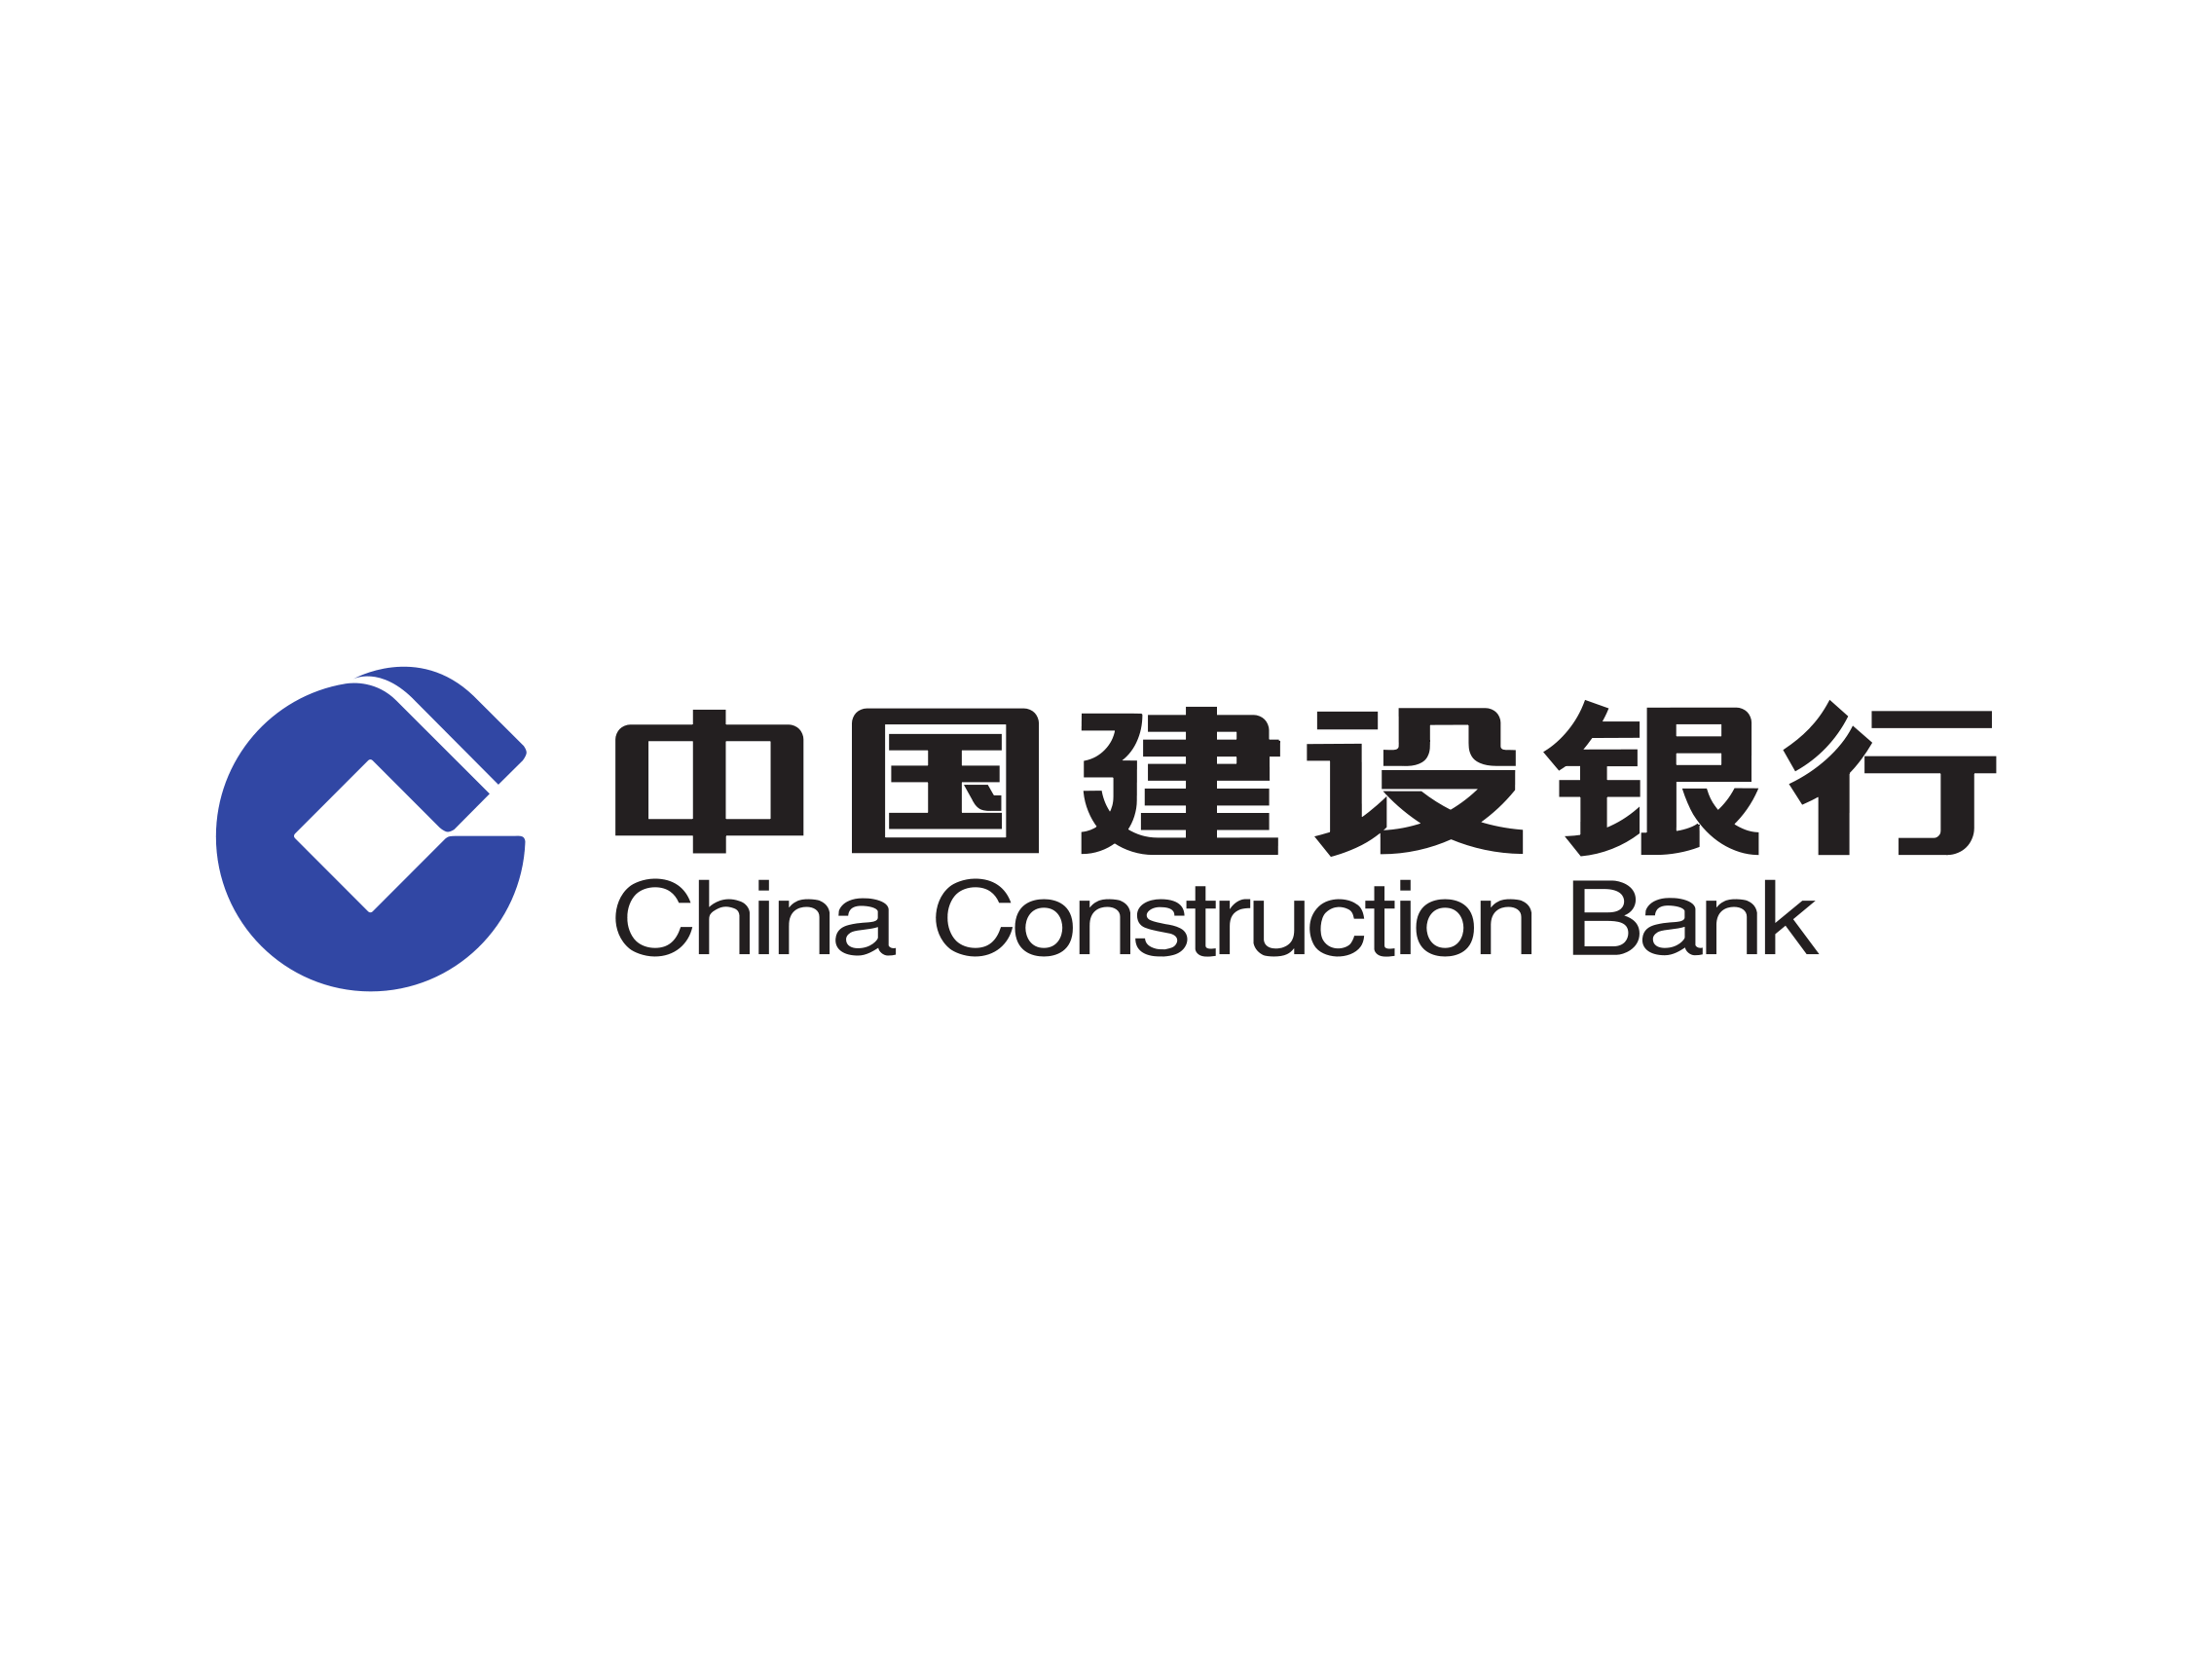 Chinese Bank Logo - China Construction Bank logo logotype - Logok